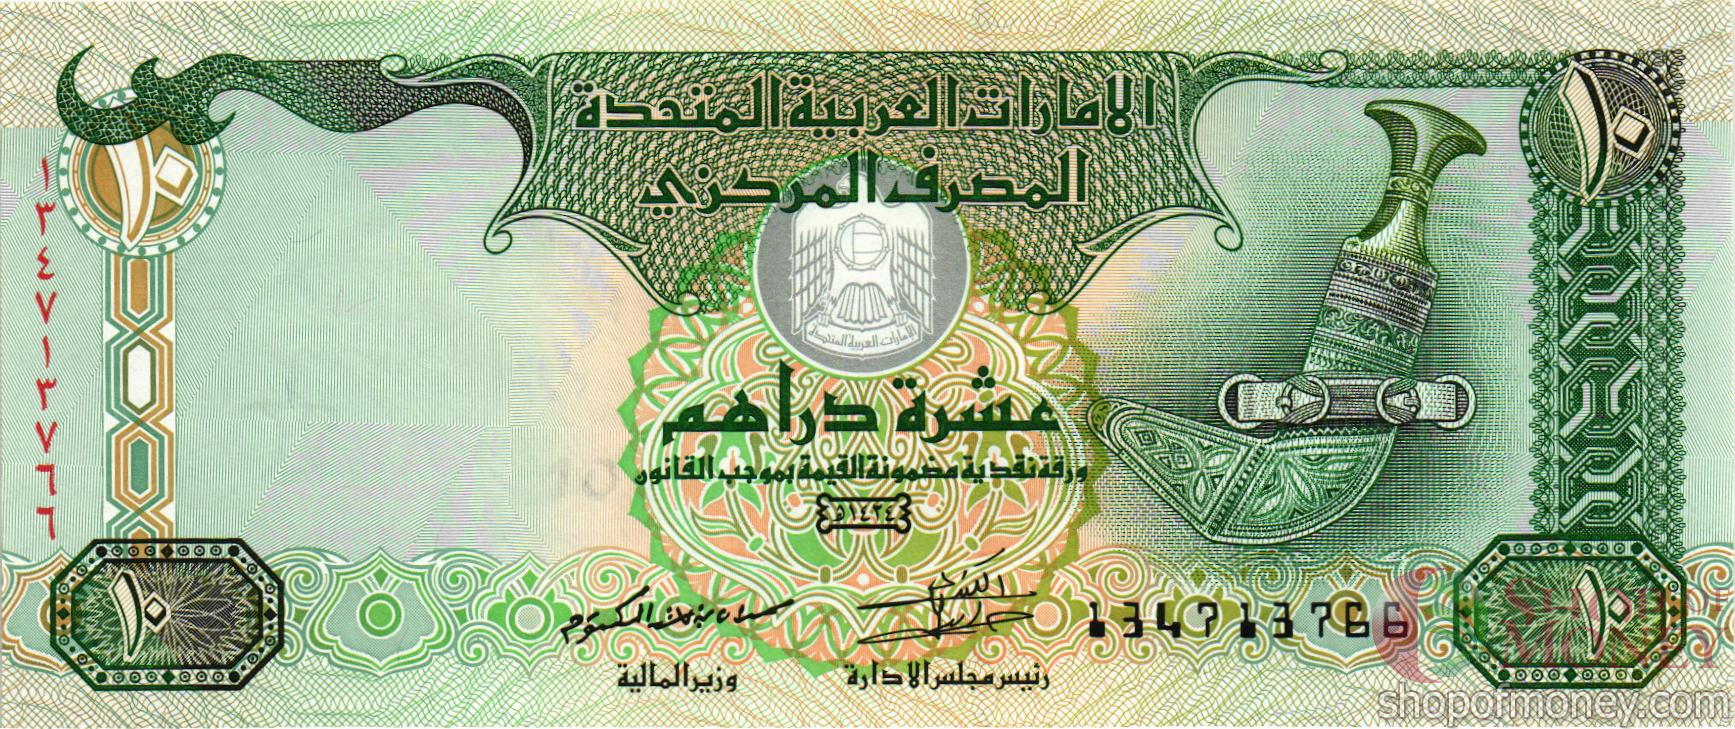 9000 дирхам. 10 Дирхам ОАЭ. Бумажные банкноты ОАЭ. Объединённые арабские эмираты 10 дирхам. Купюры дирхамы ОАЭ.